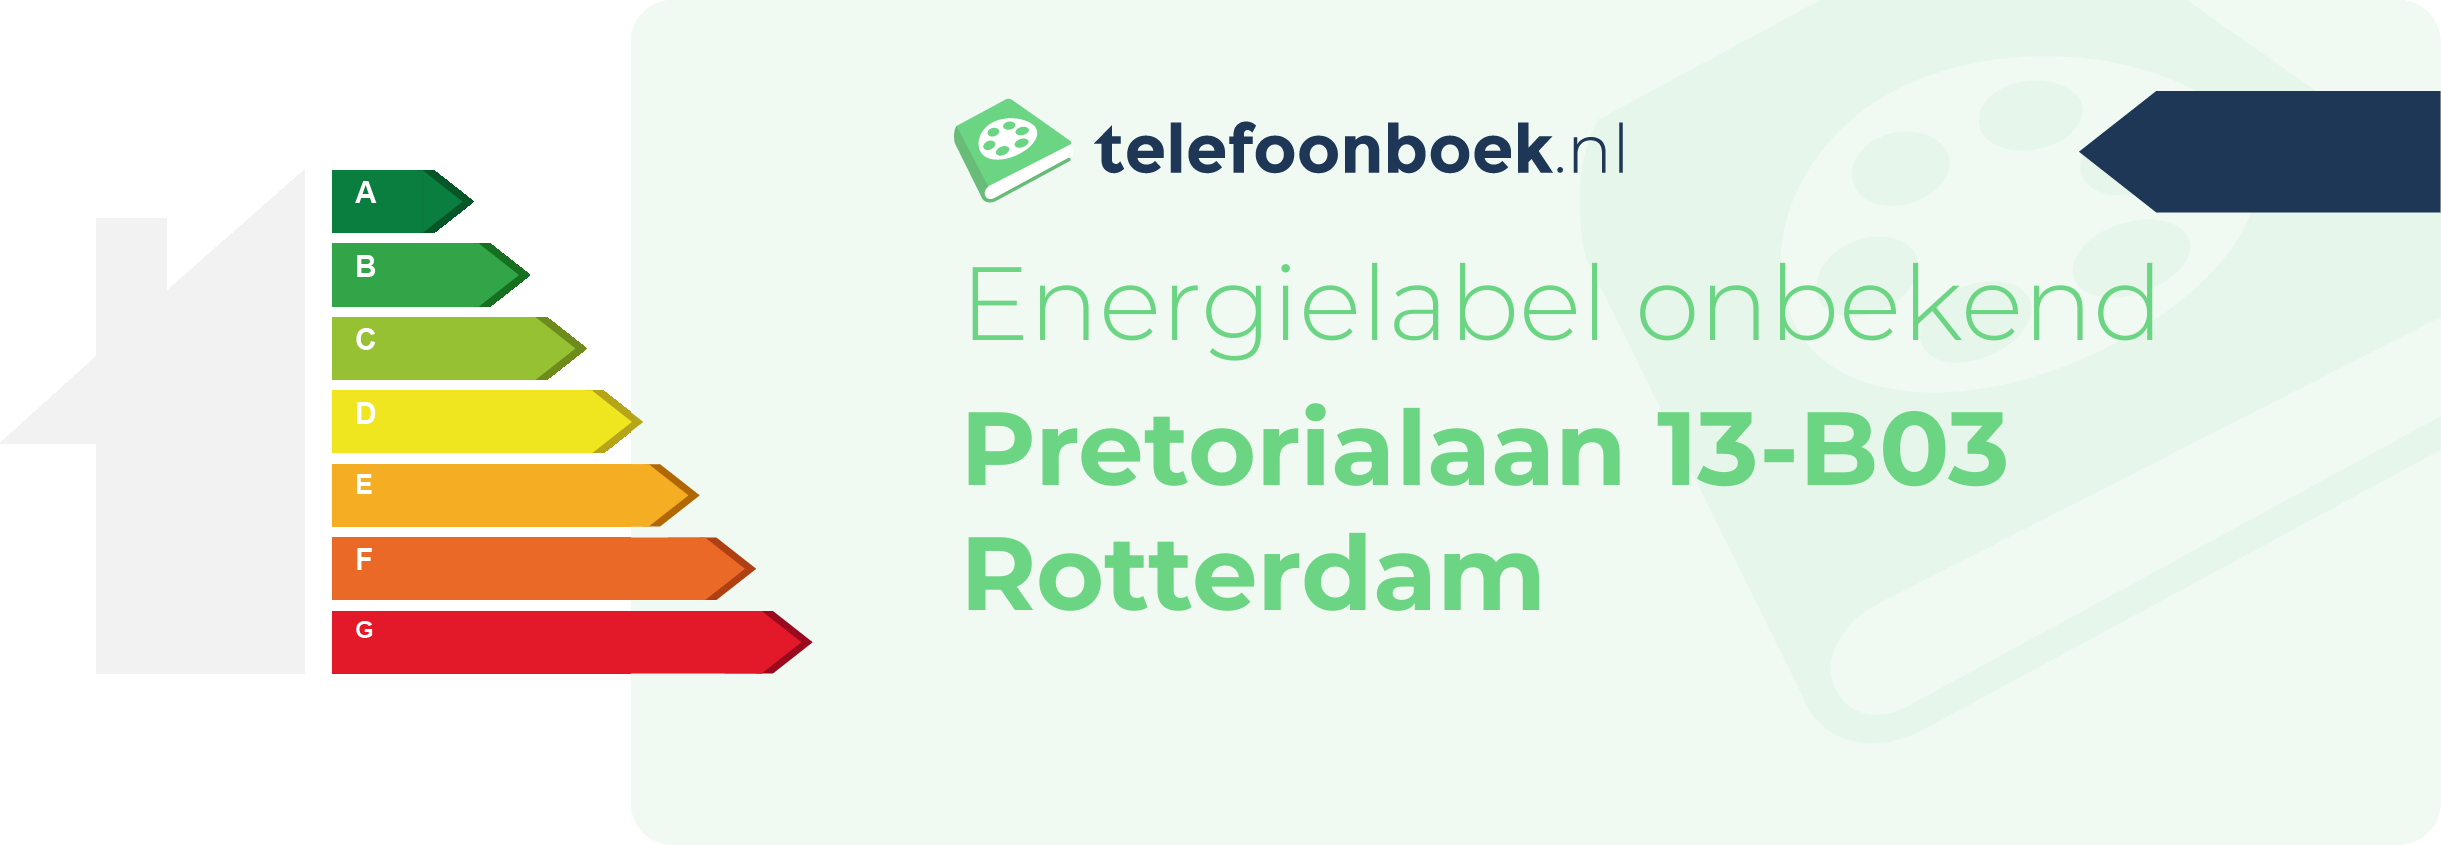 Energielabel Pretorialaan 13-B03 Rotterdam